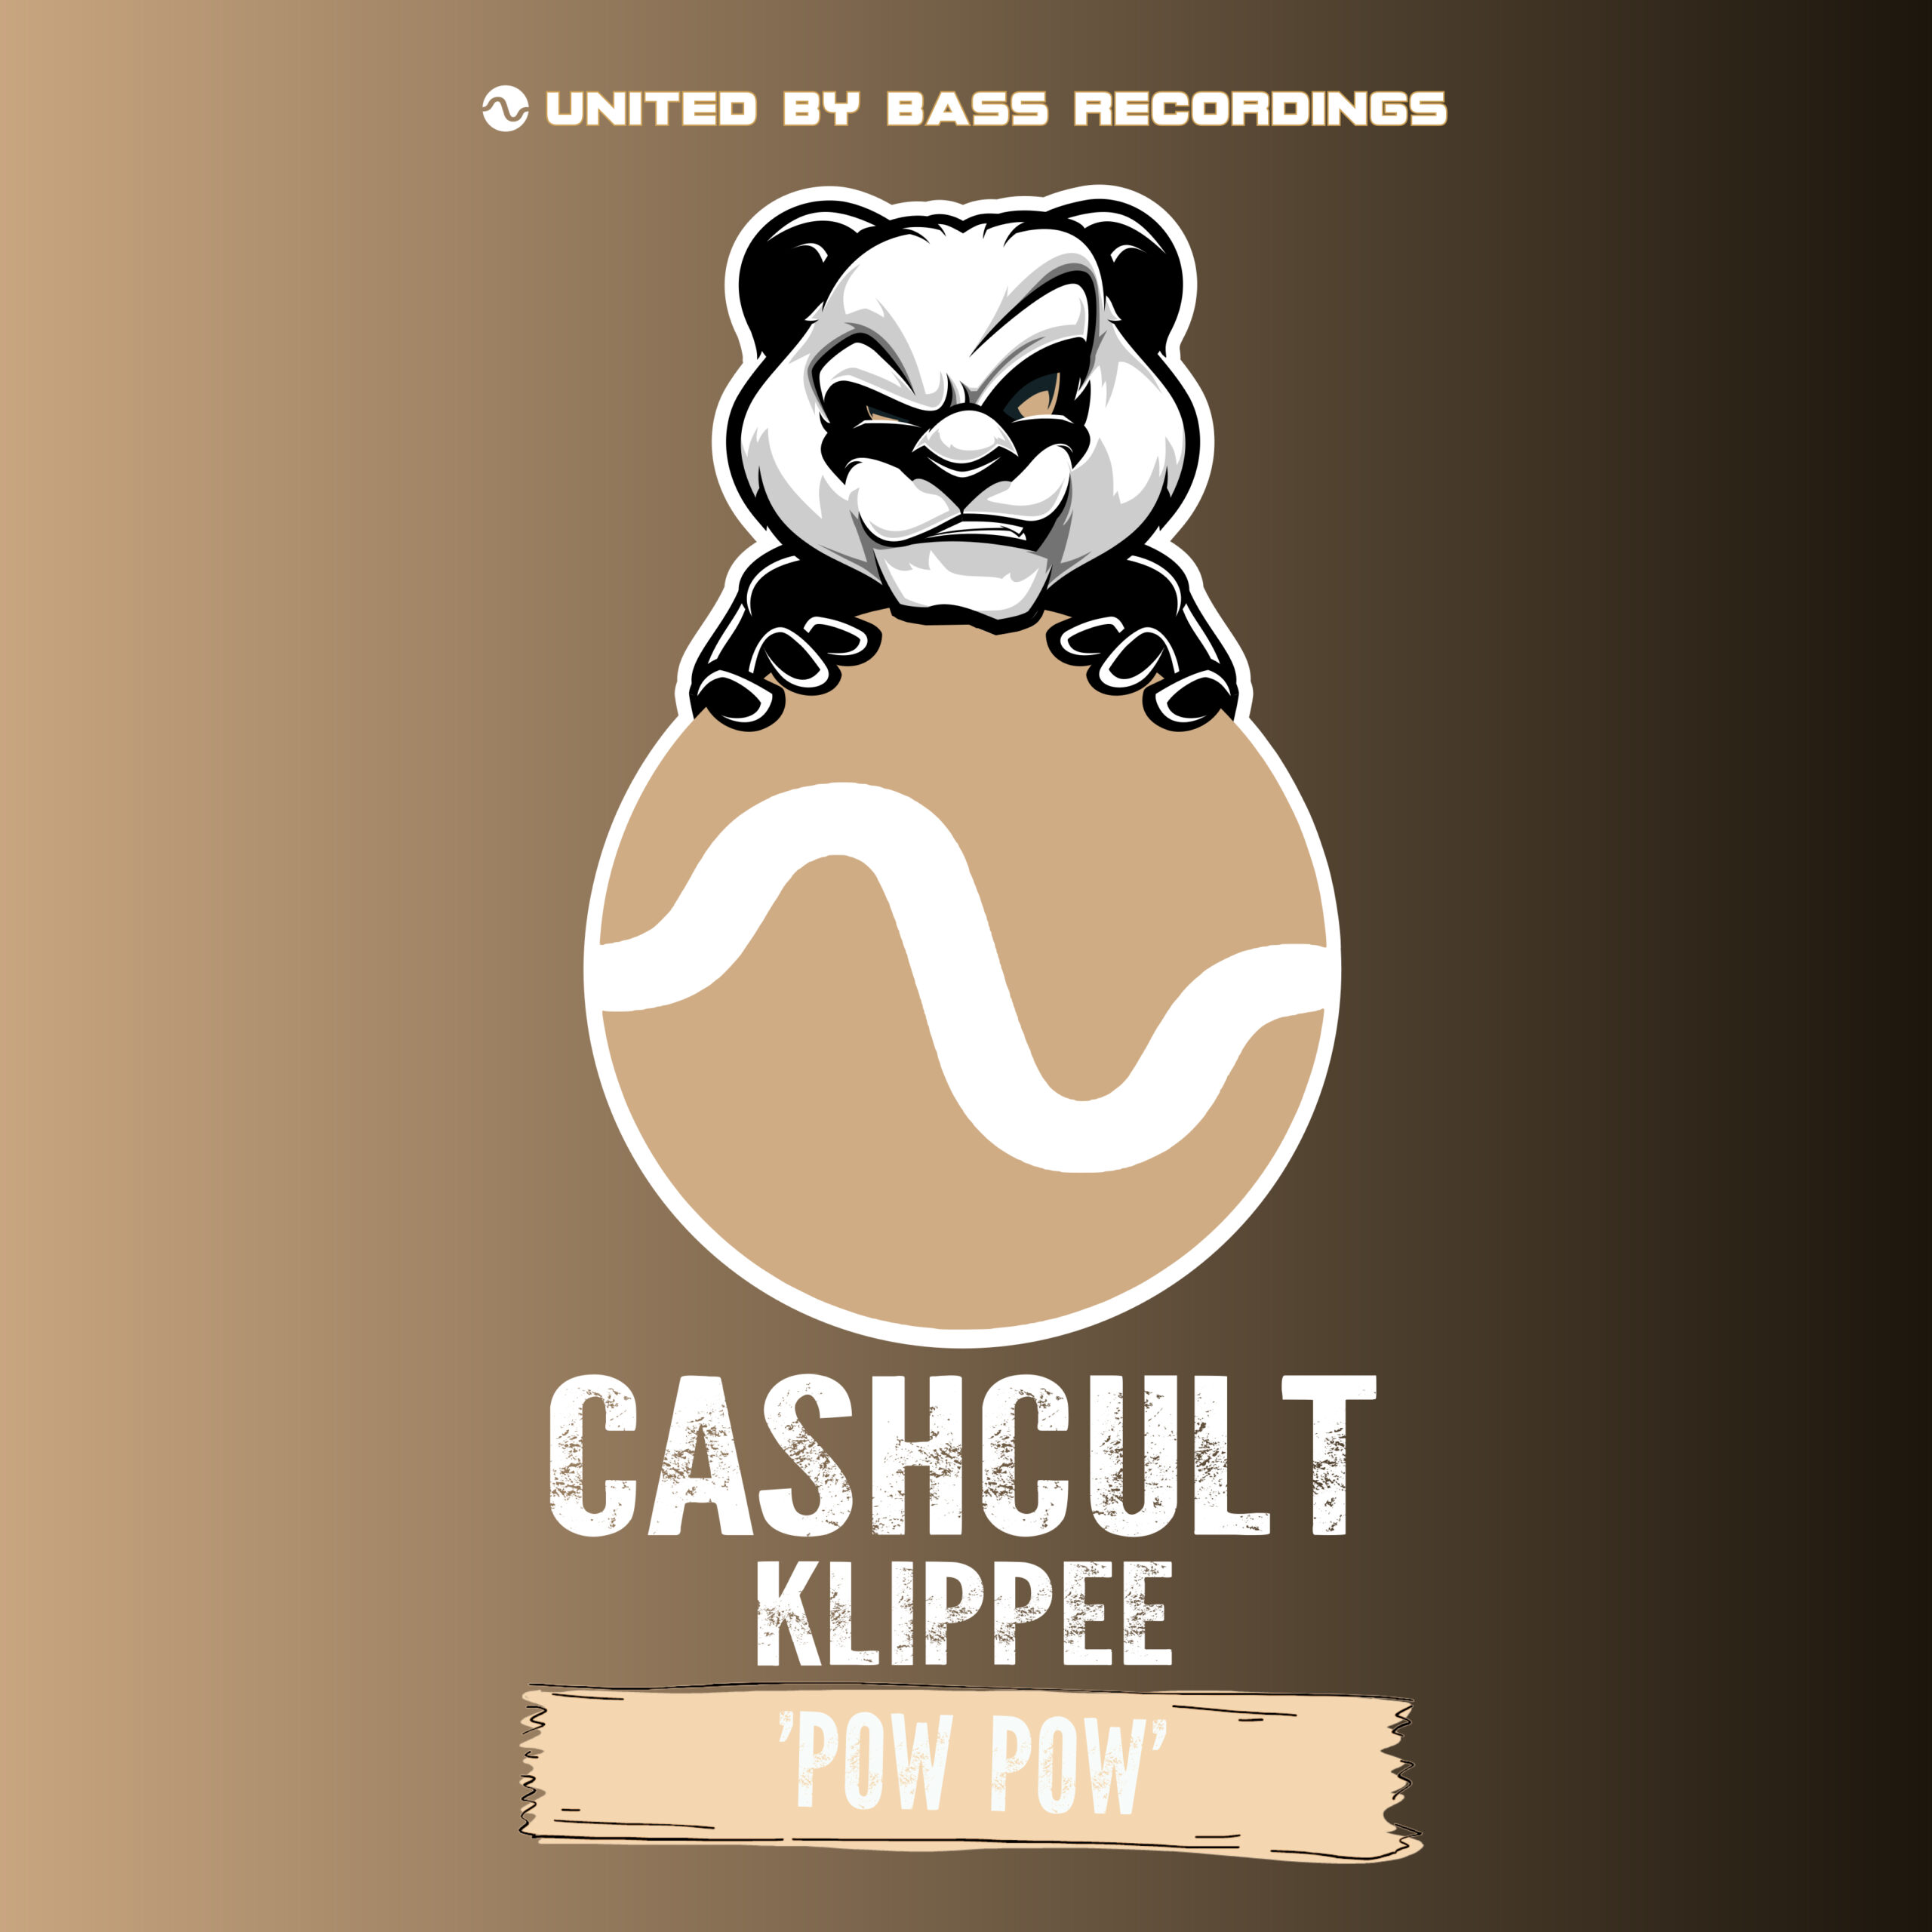 UBB Recordings artwork with Cashcult & Klippee